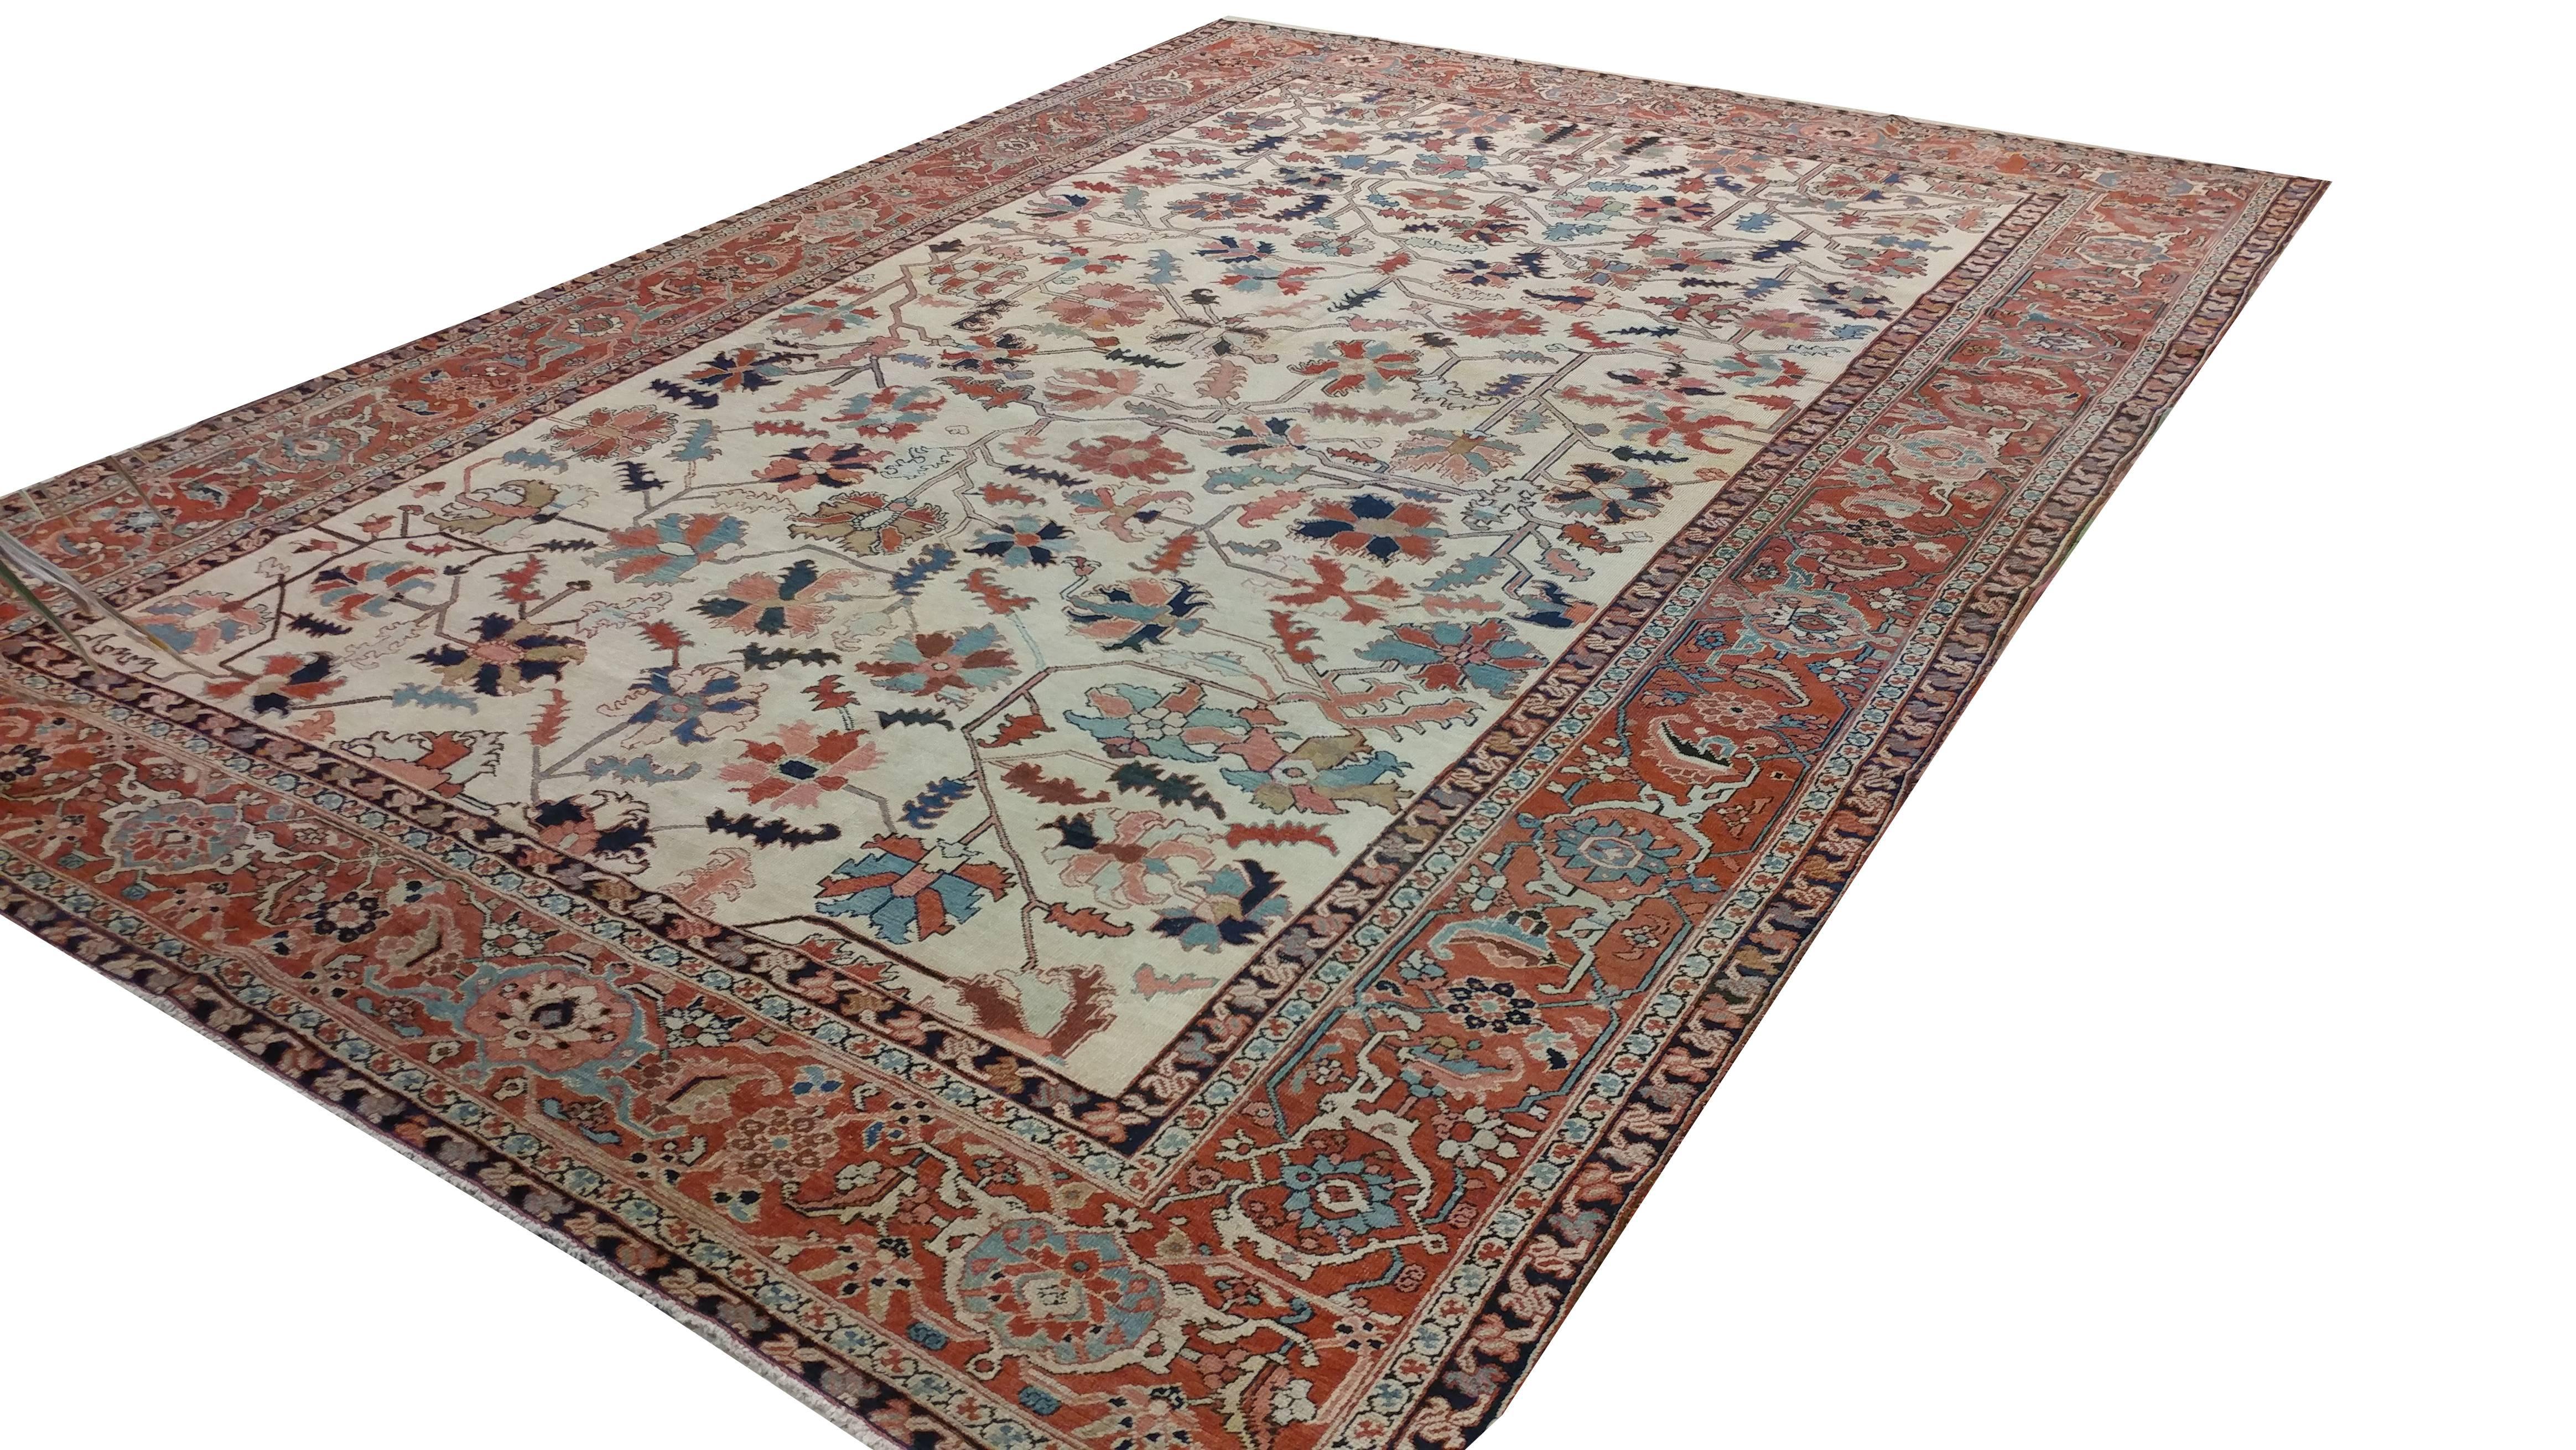 Antique Persian Serapi Carpet, Handmade Wool Oriental Rug, Ivory and Light Blue For Sale 3